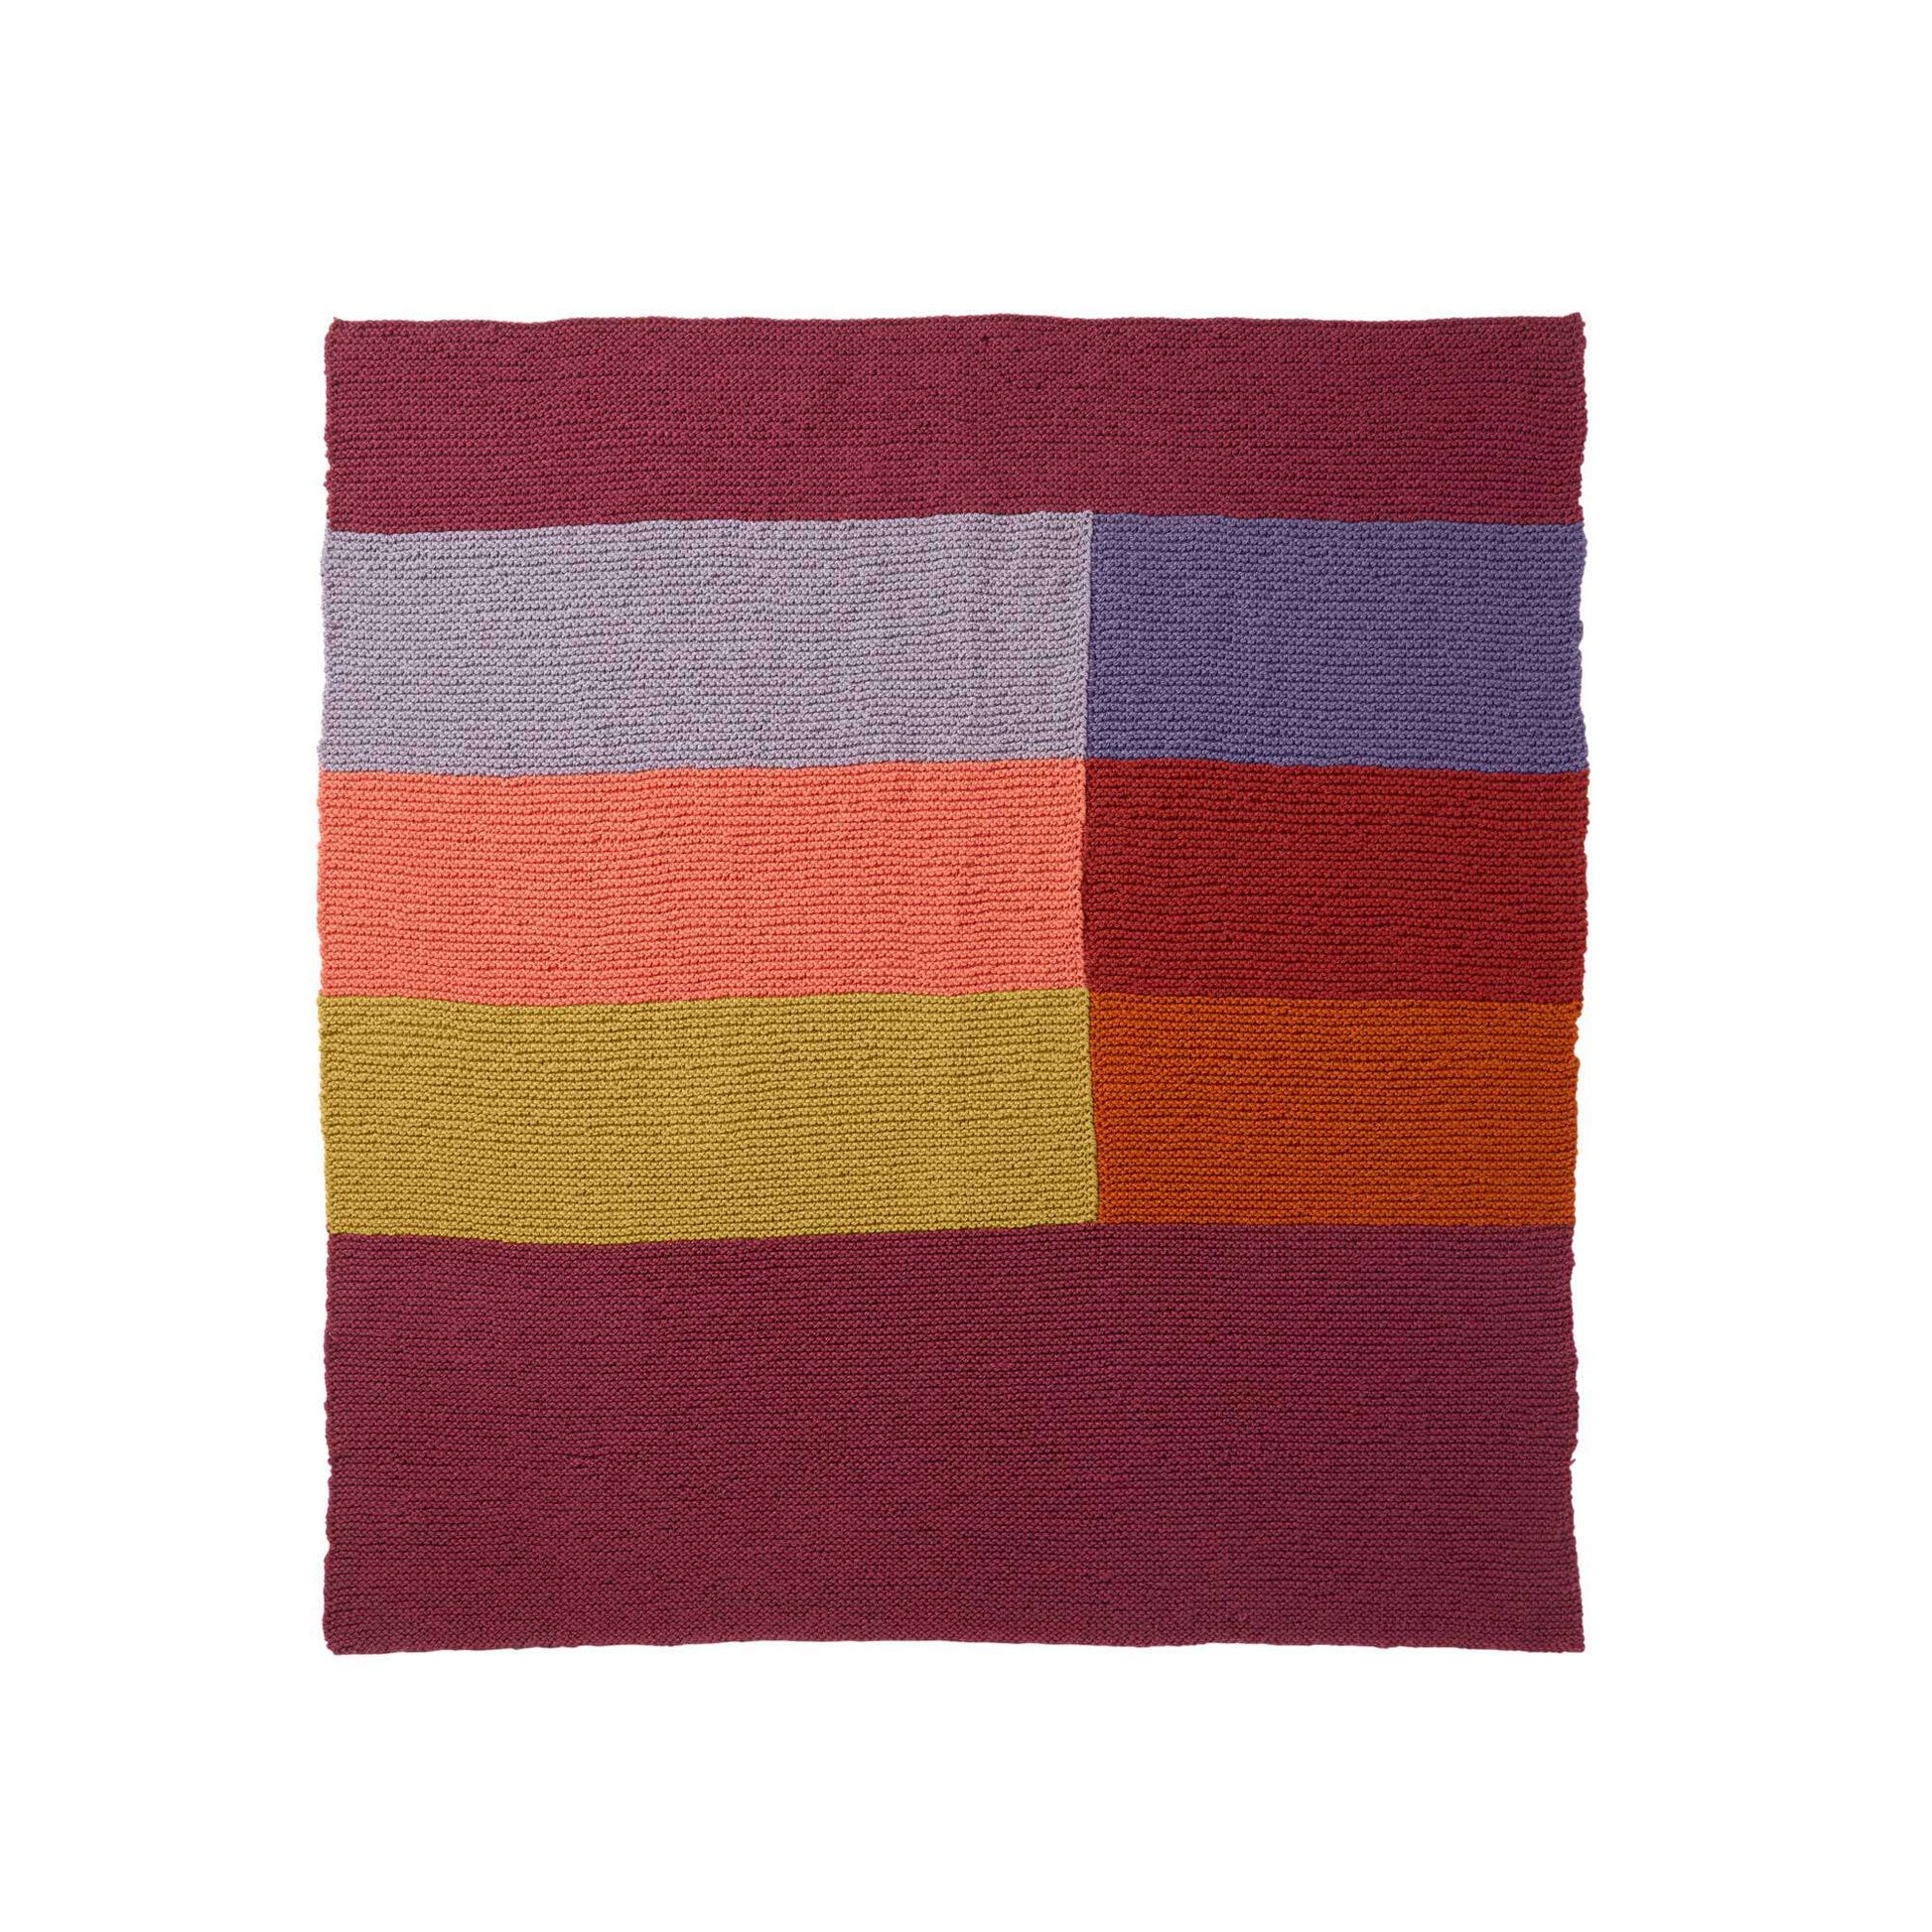 Free Patons Blocking Minimalist Knit Blanket Pattern